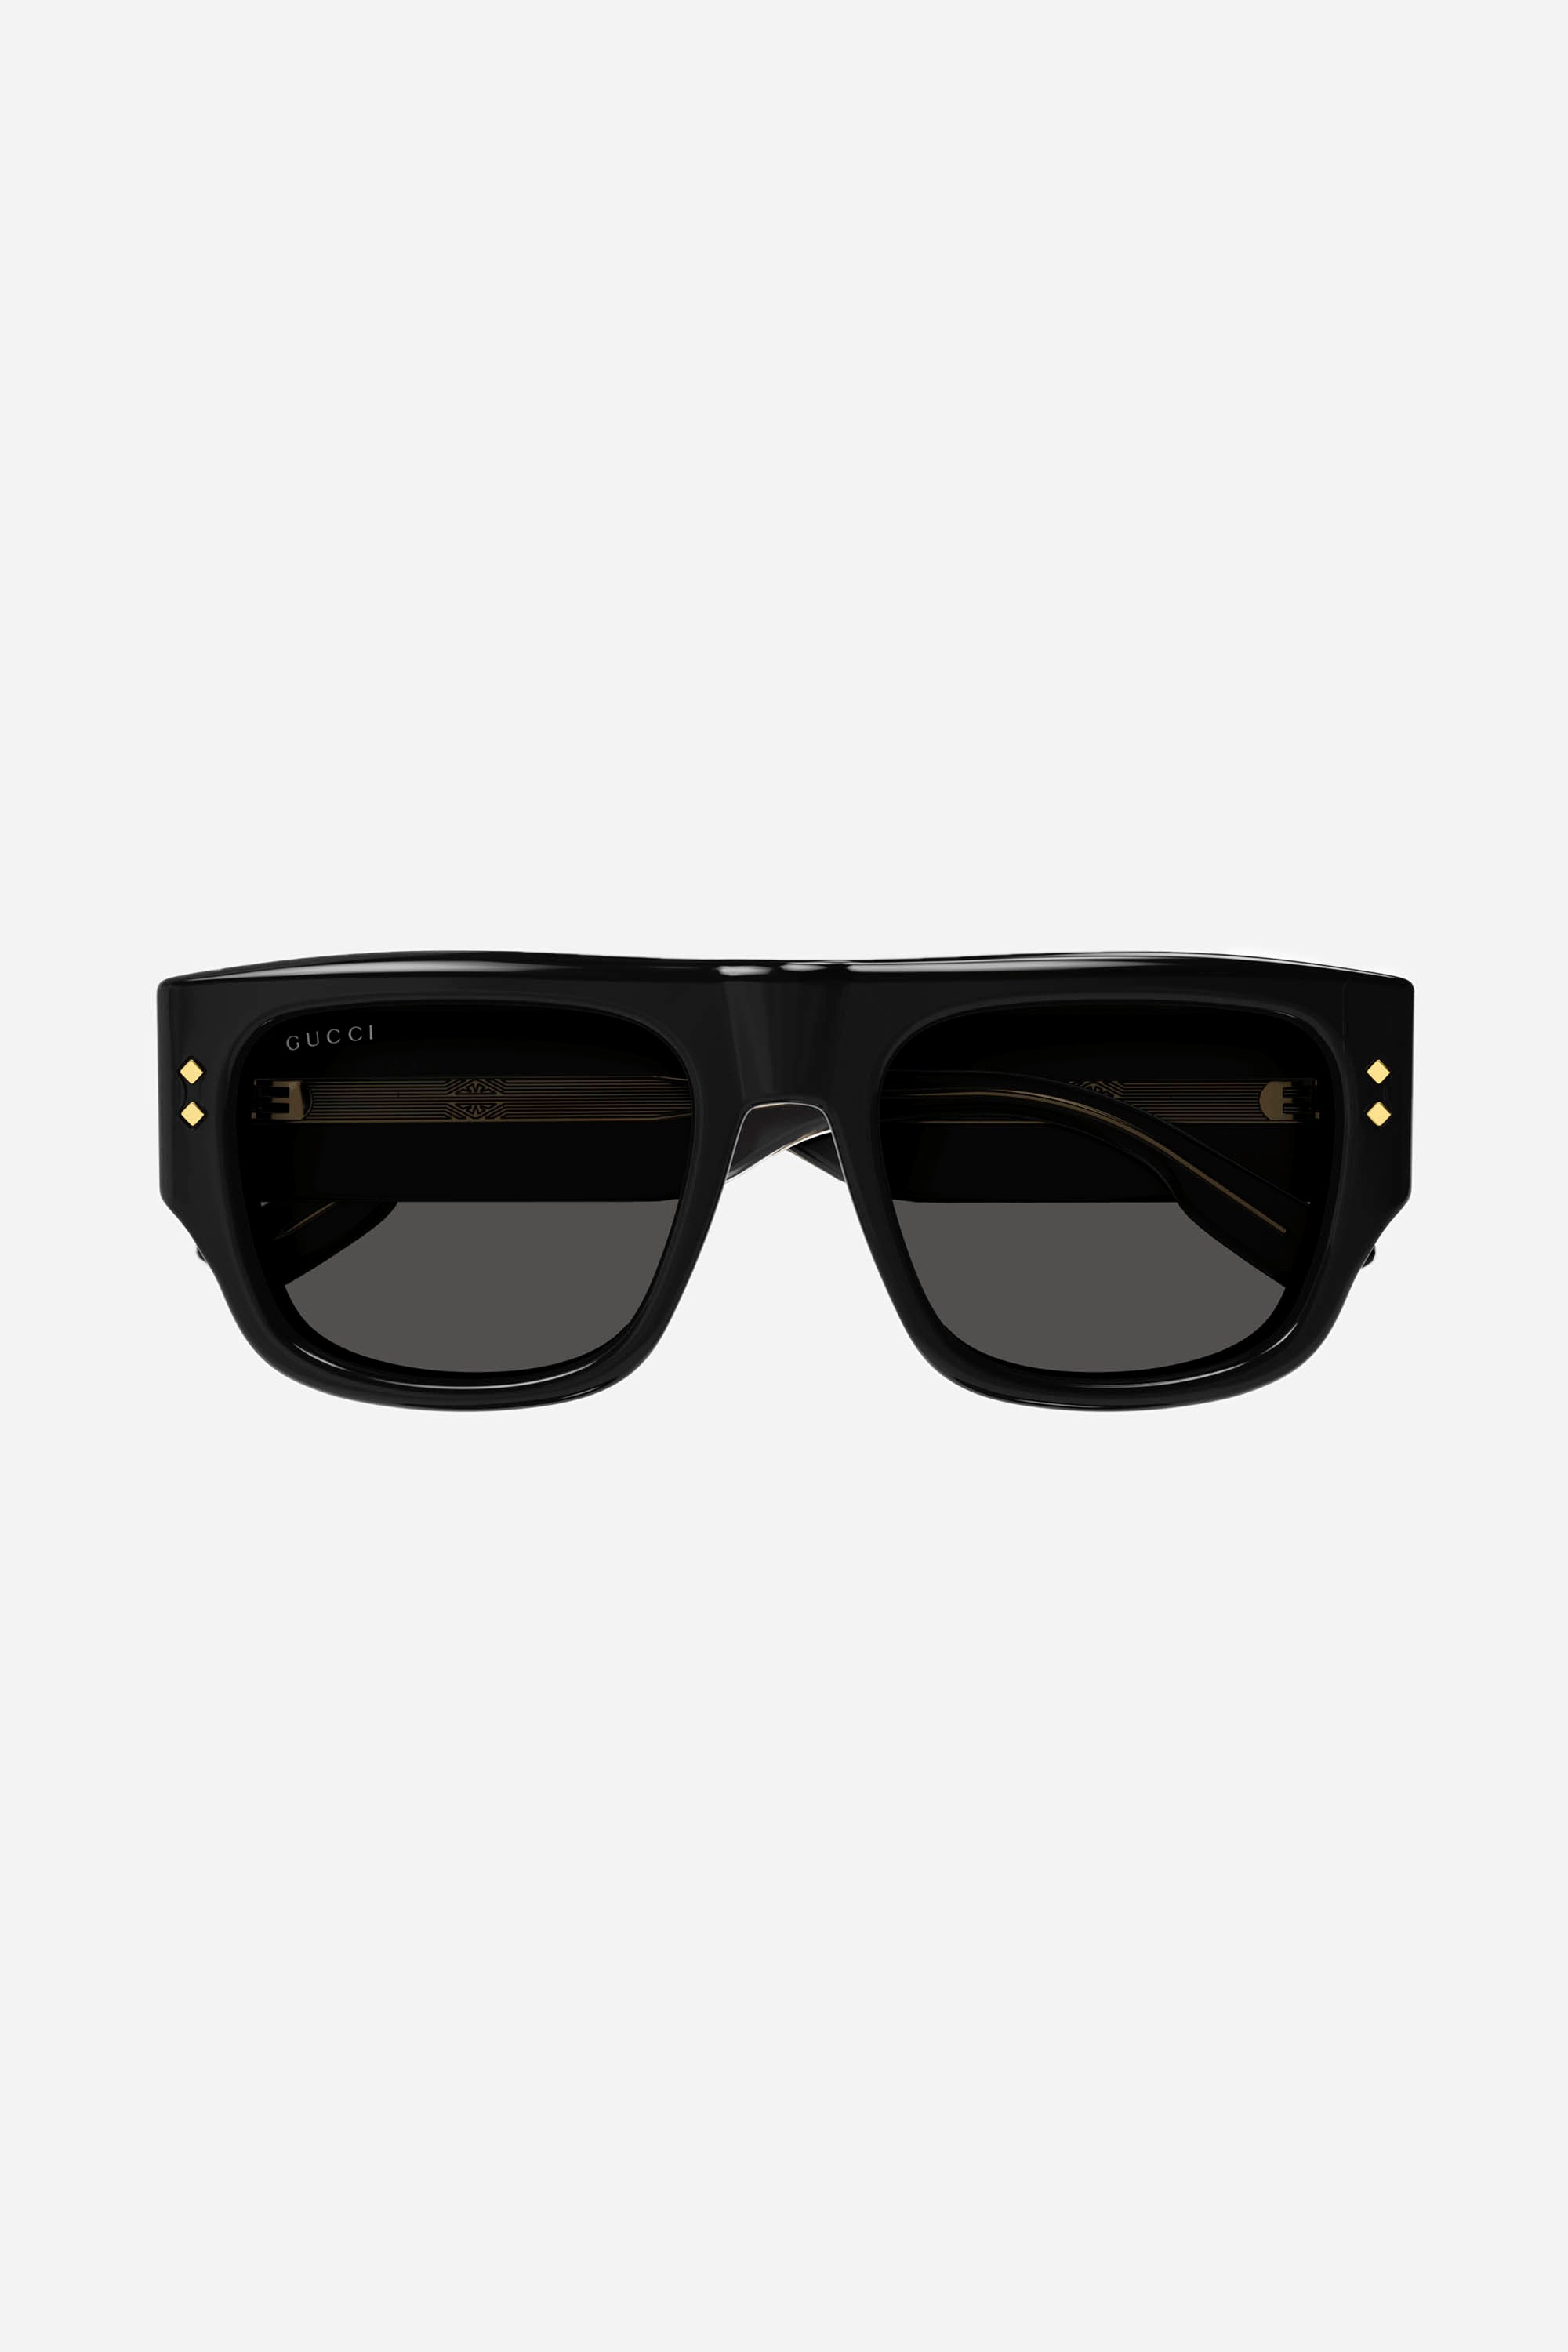 Gucci rectangular black sunglasses - Eyewear Club